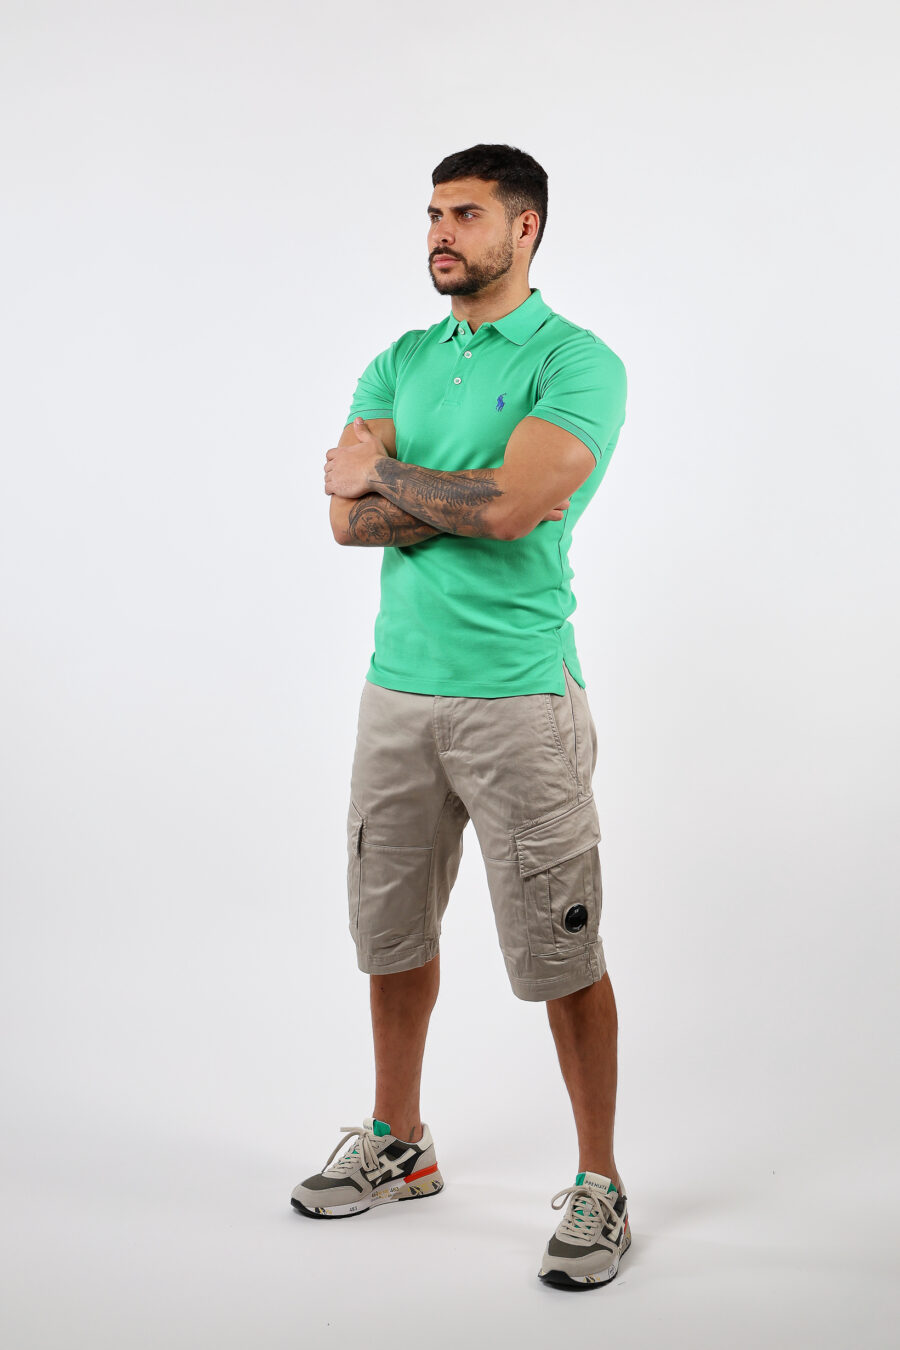 Camiseta verde y azul con minilogo "polo" - BLS Fashion 173